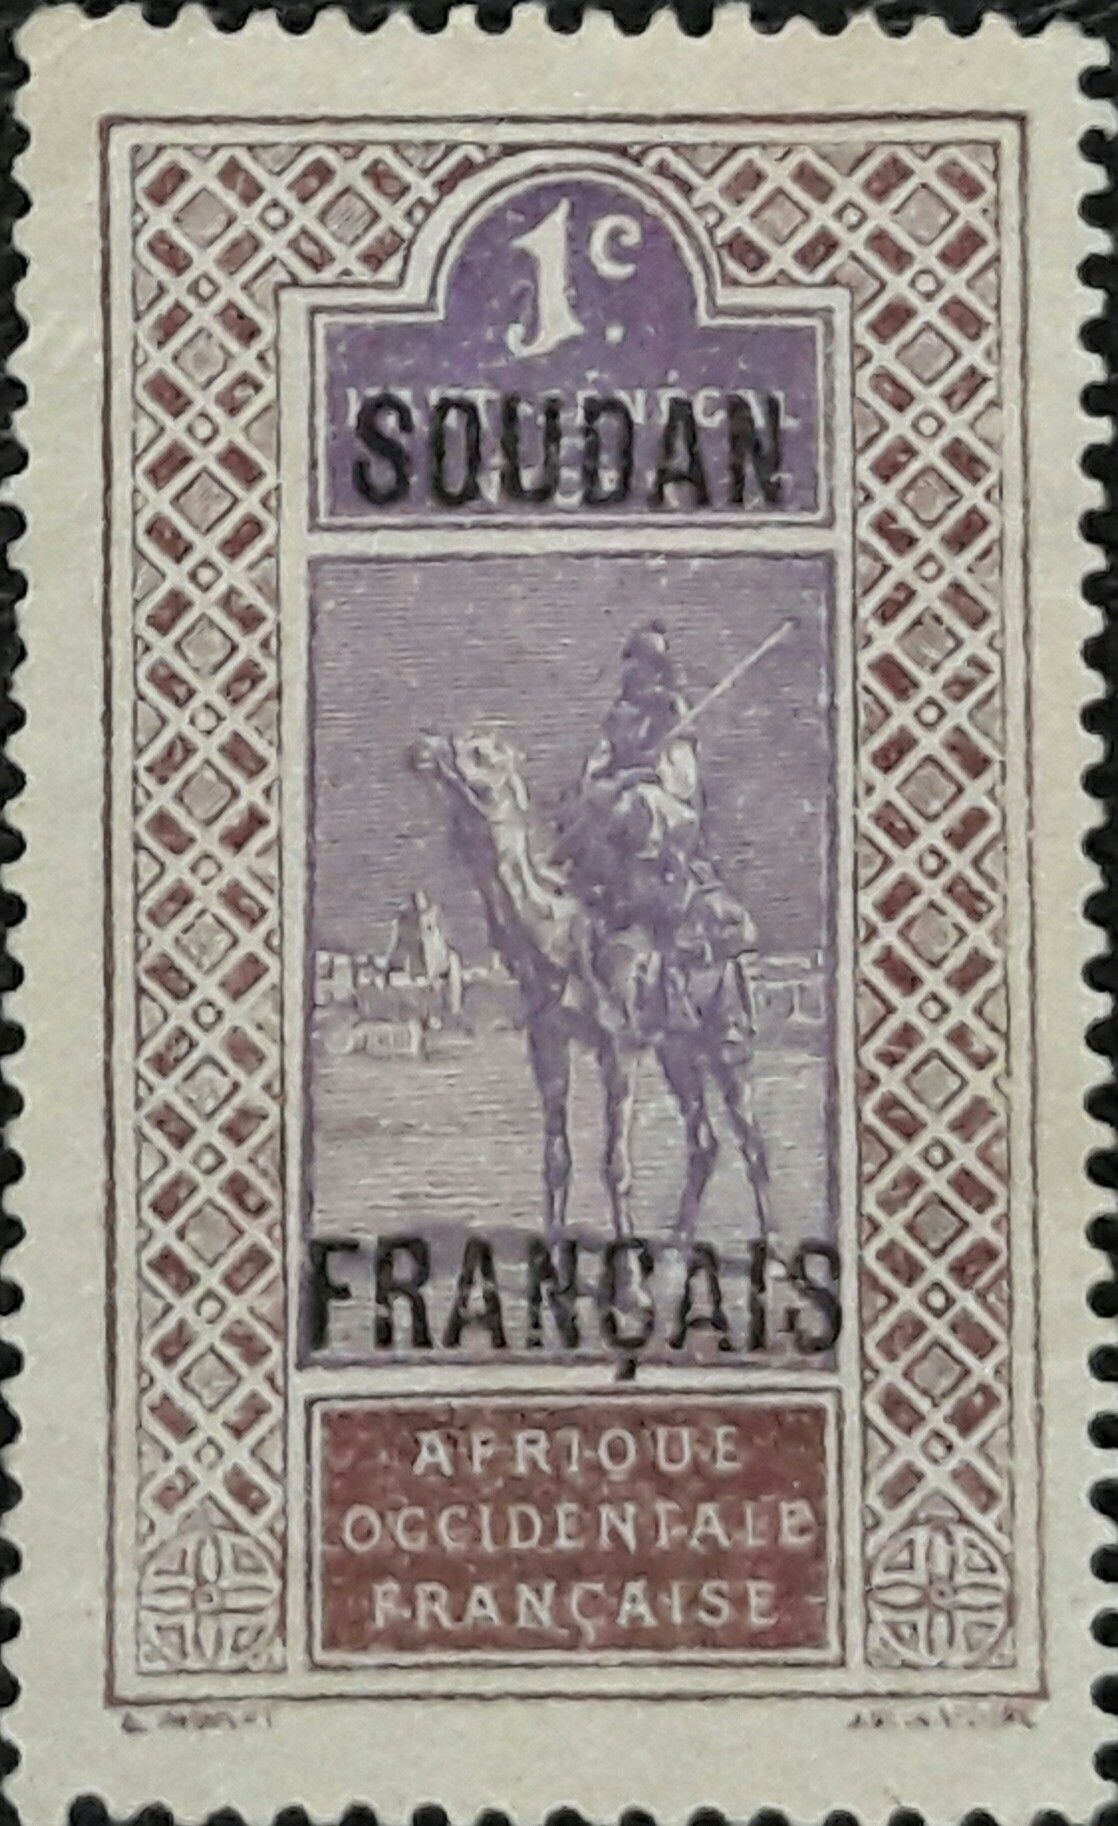 Français Soudan Stamp | Stamps | Pinterest